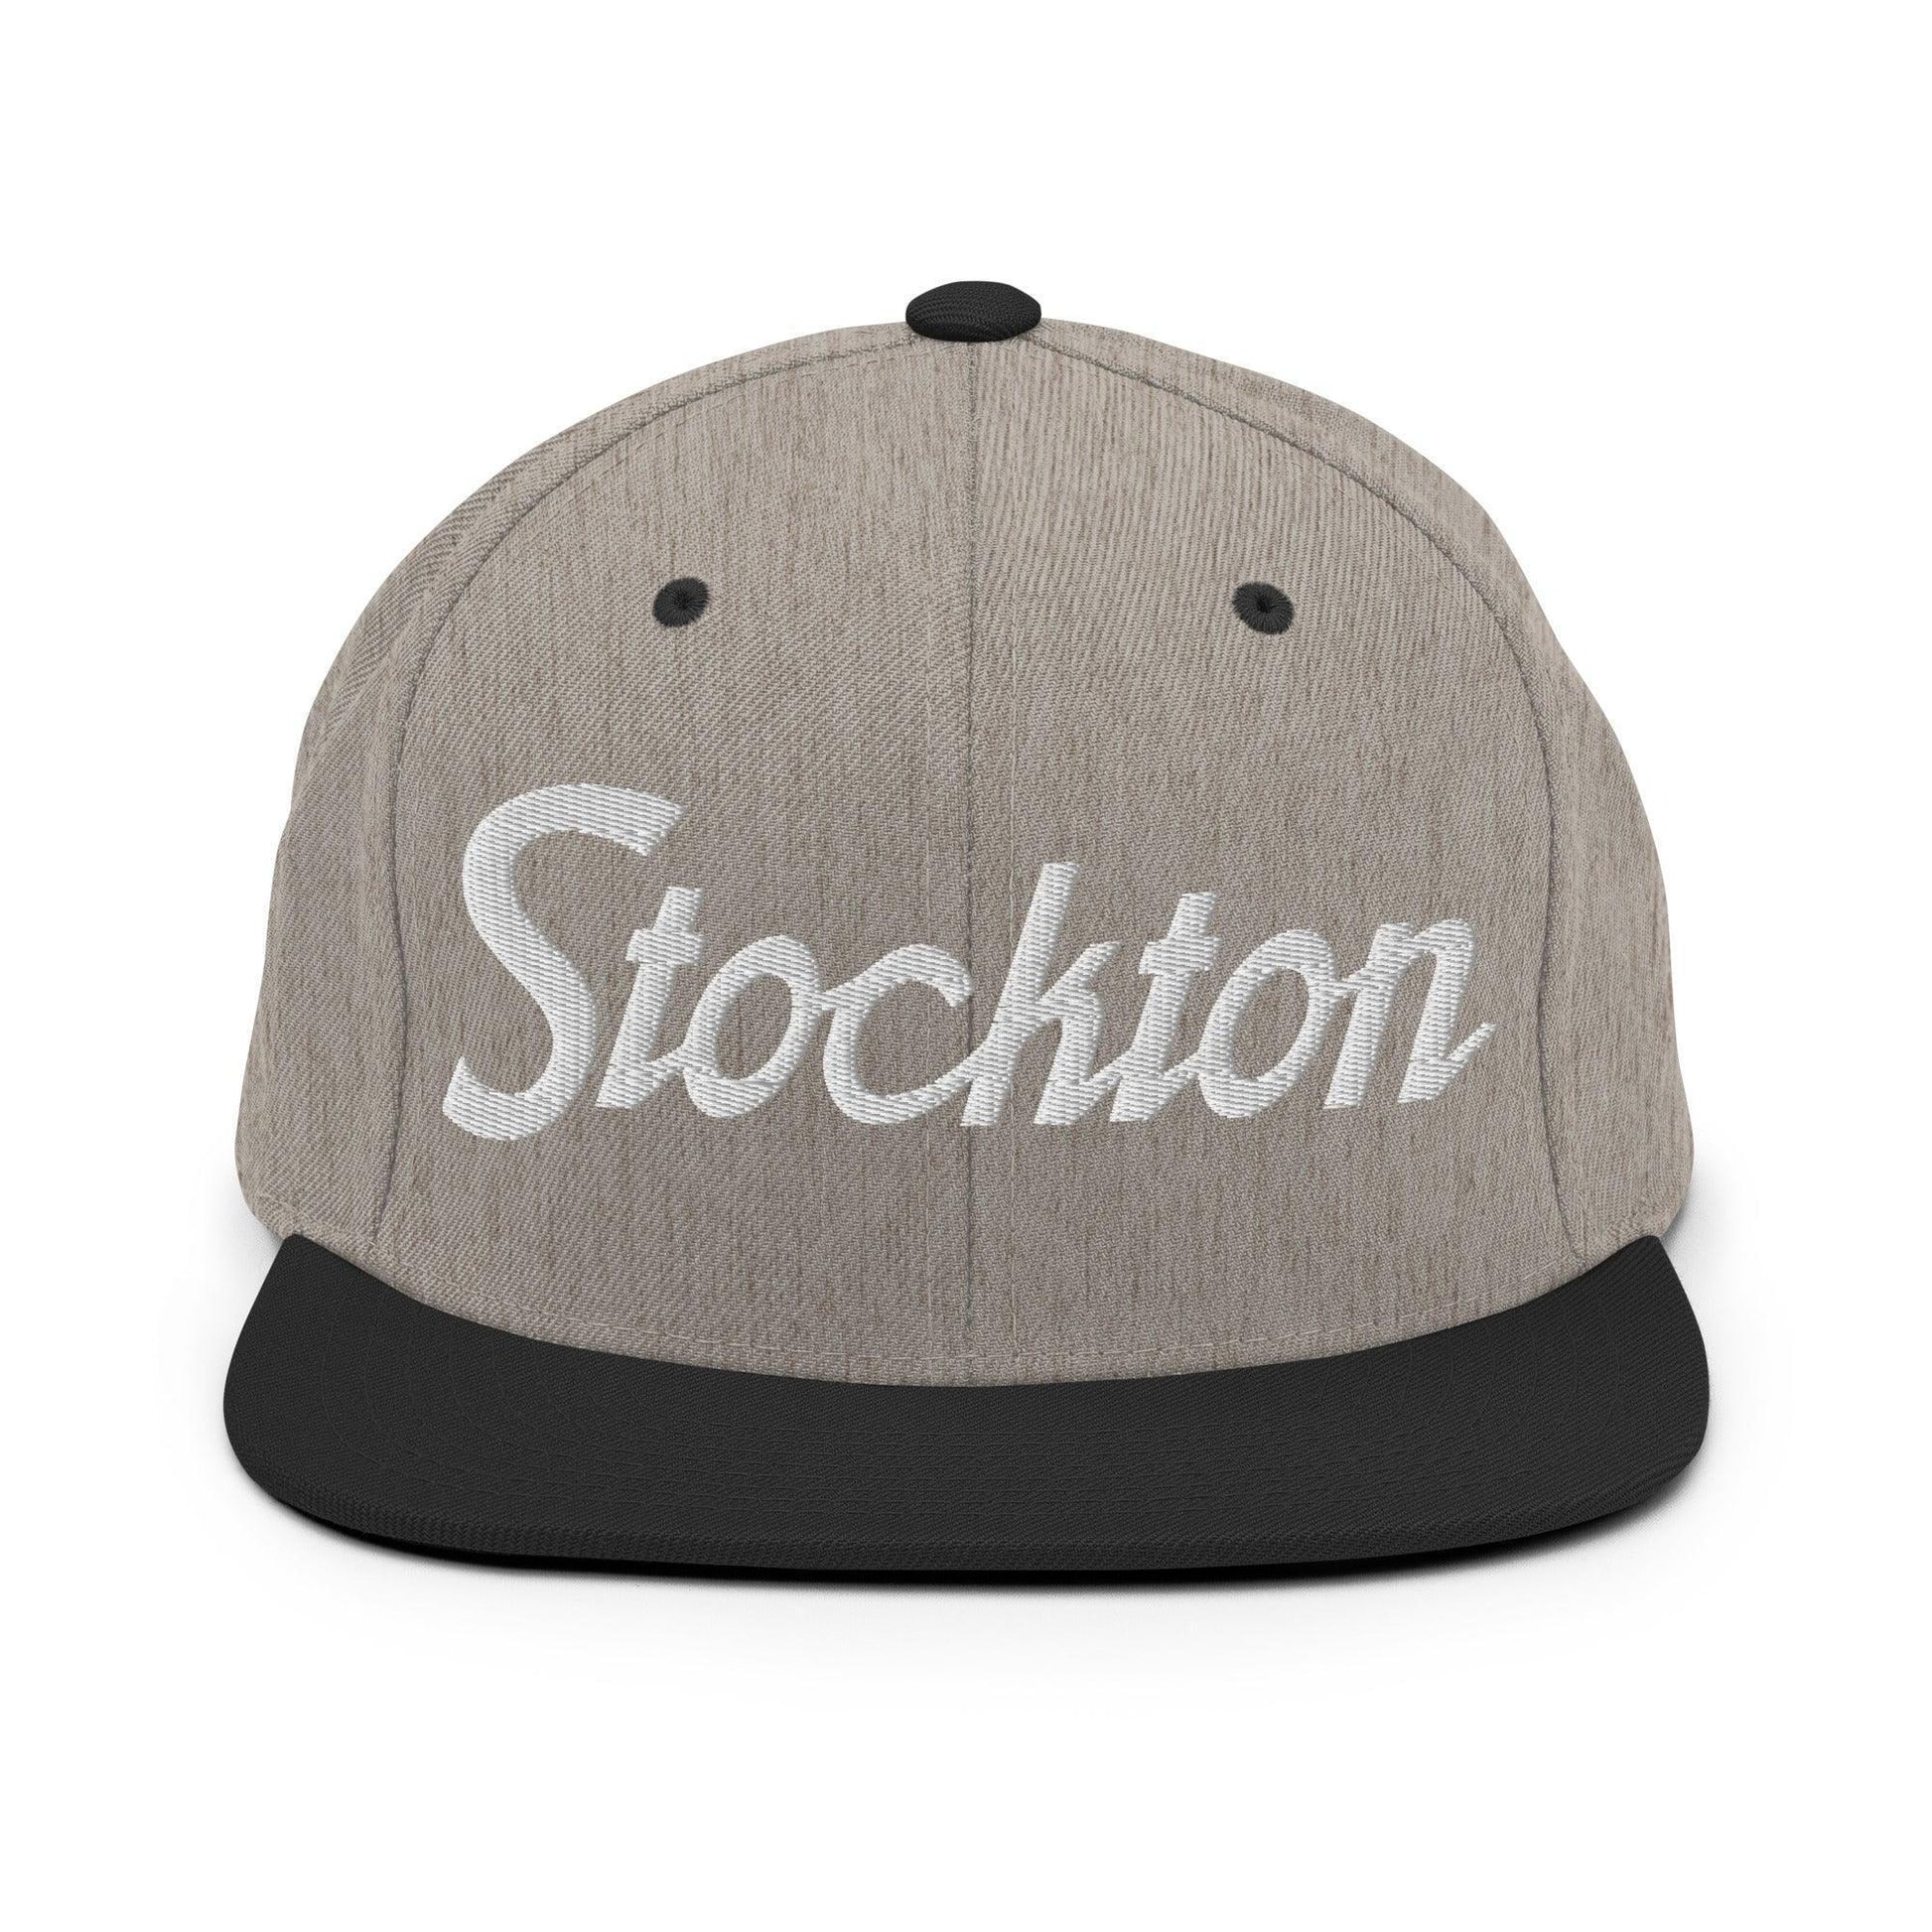 Stockton Script Snapback Hat Heather/Black